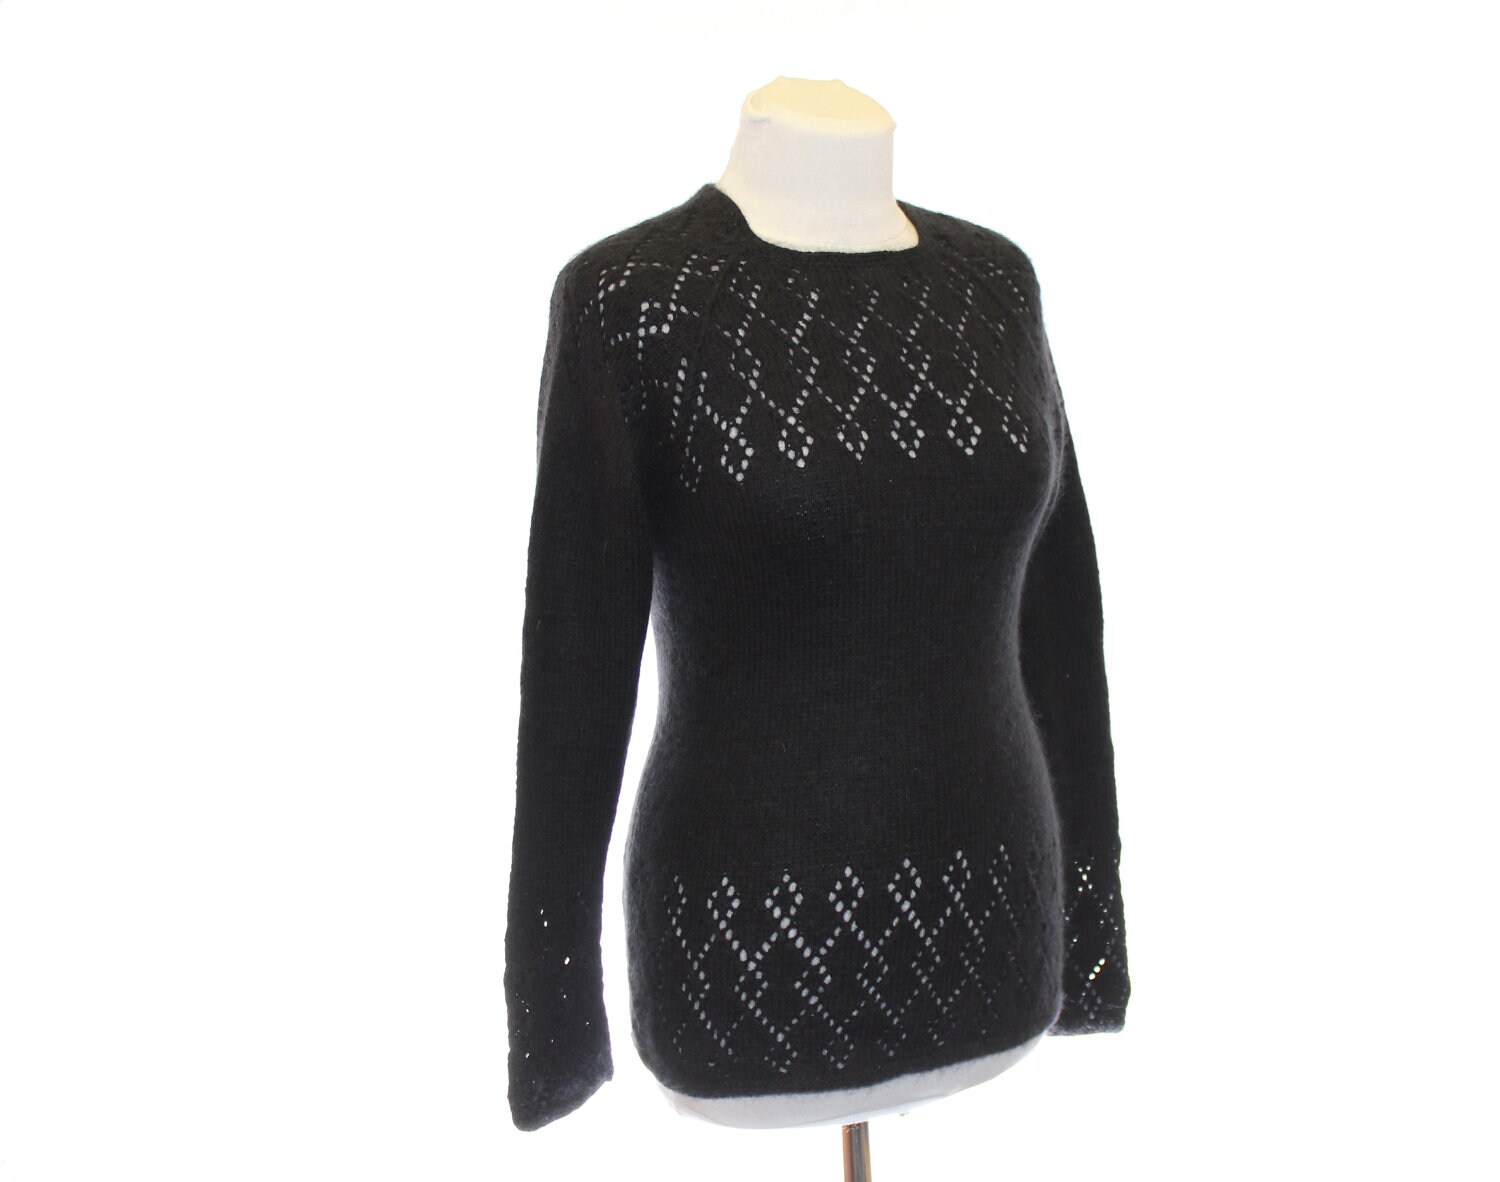 OOAK Knited Jumper / Black Cat / Sweater for Women / Angora | Etsy